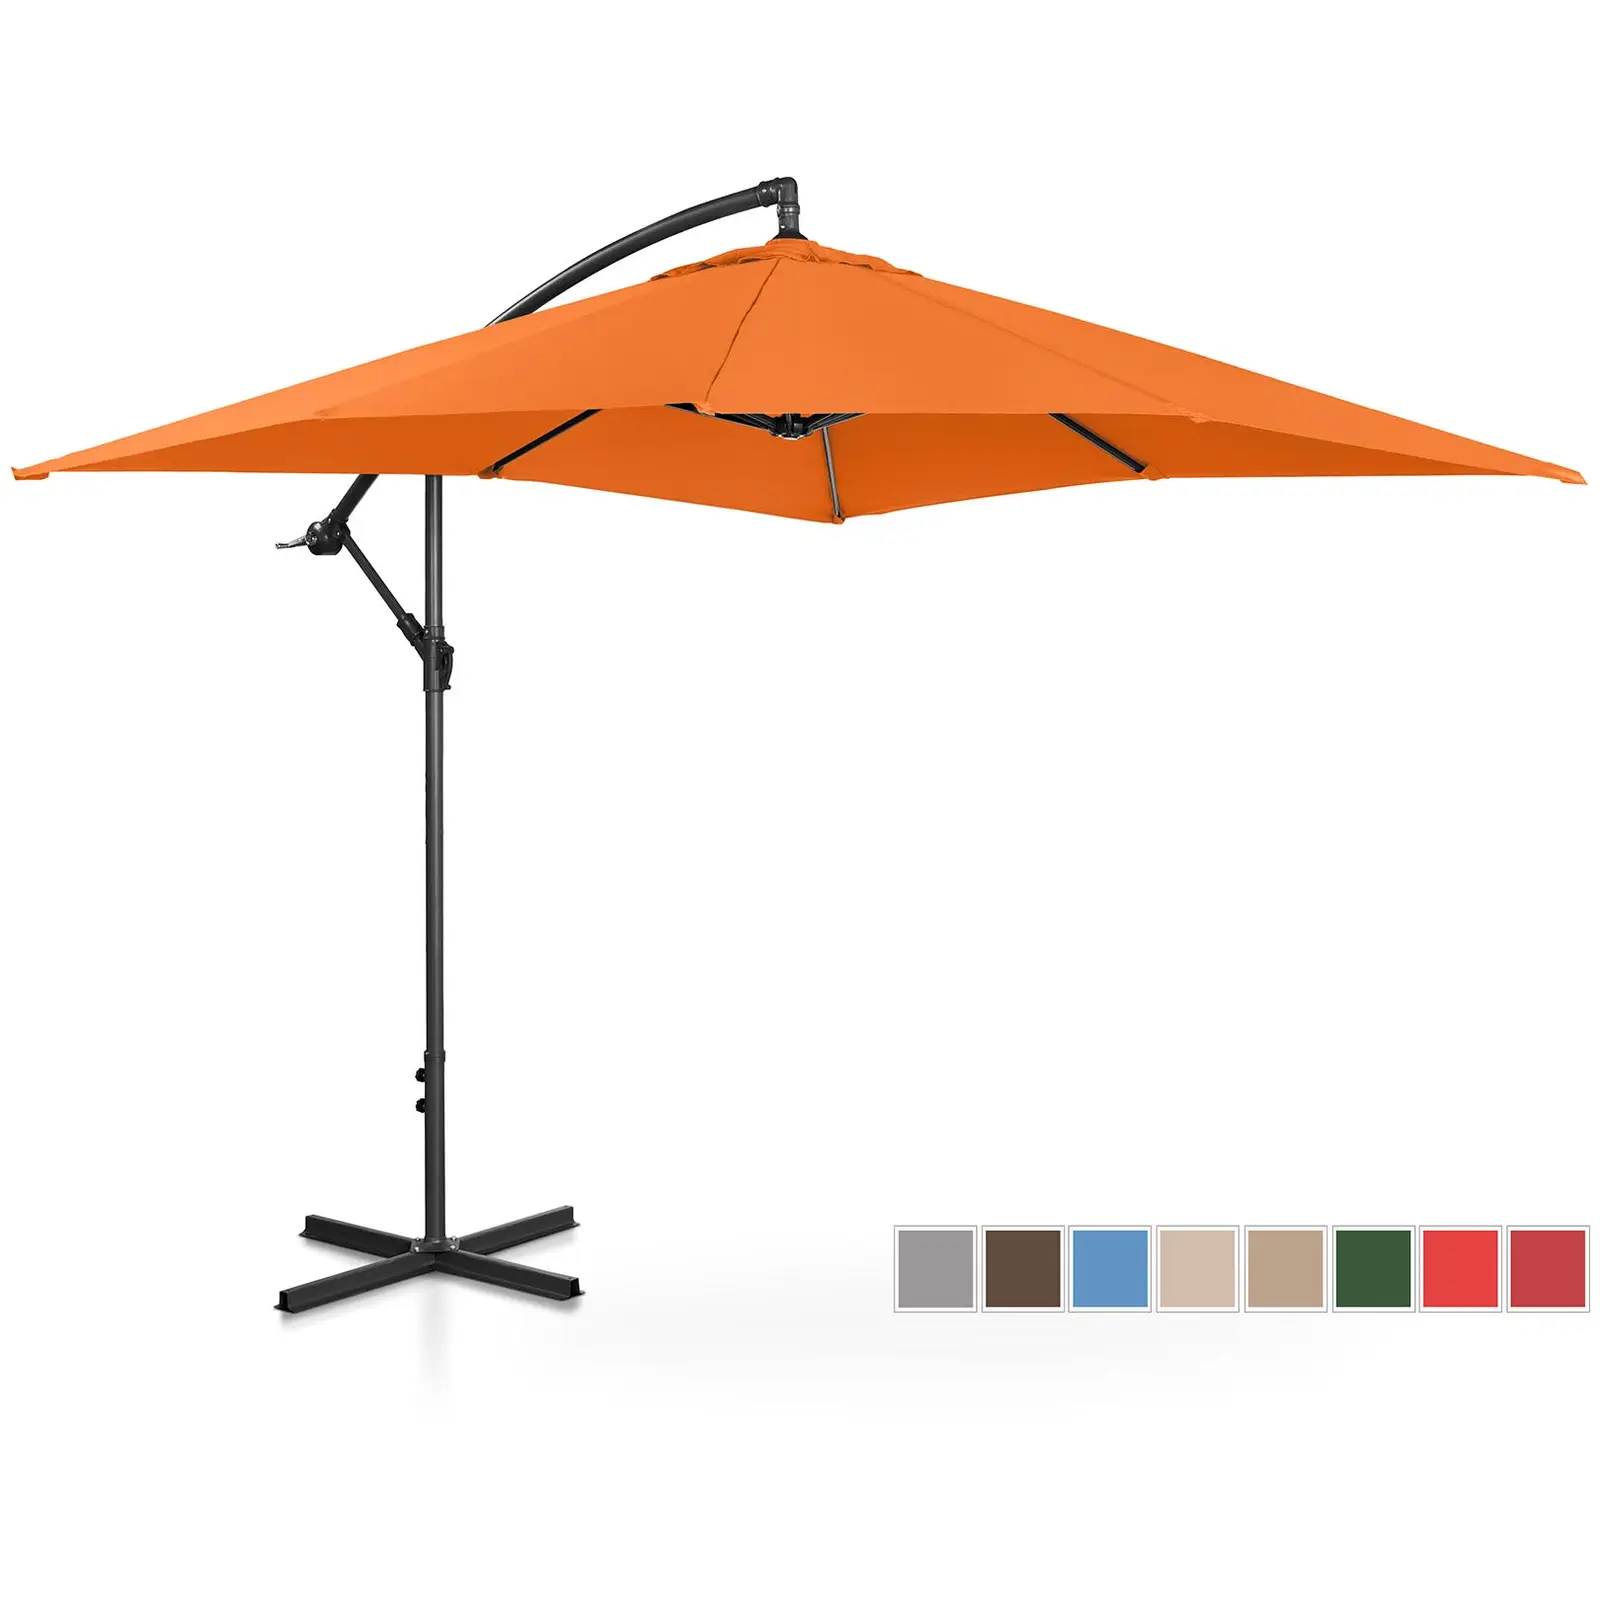 Parasol de jardin - Orange - carré - 250 x 250 cm - inclinable